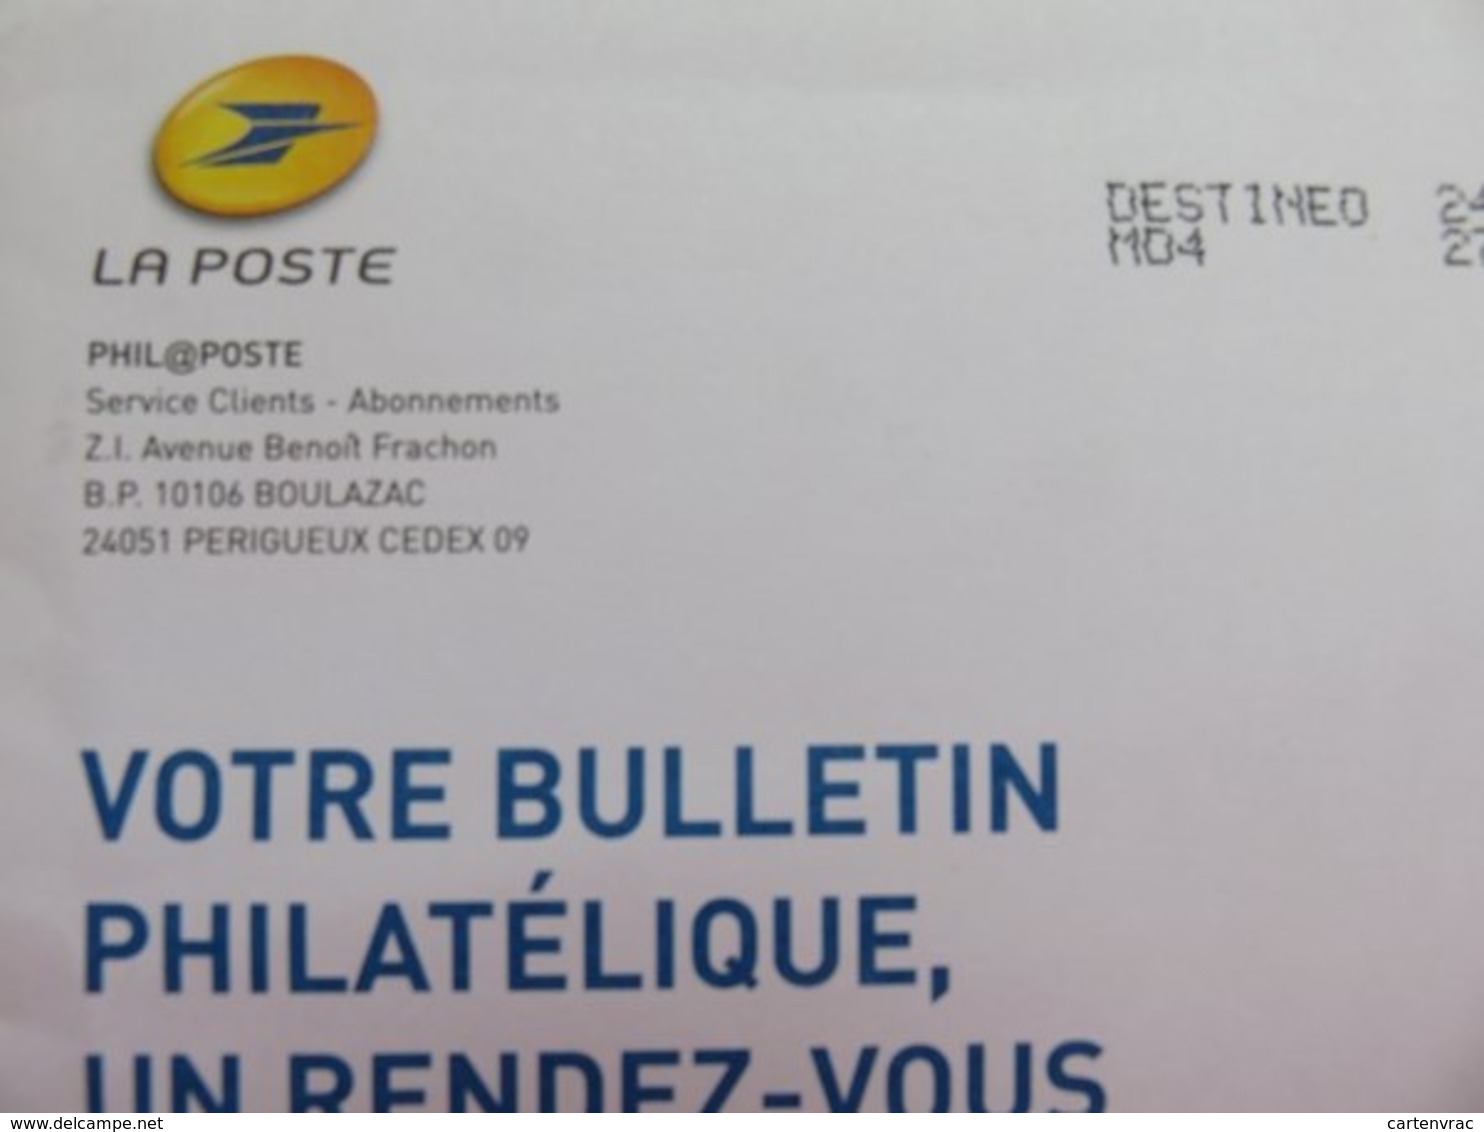 PAP - Entier Postal - Club Phil@poste - Philaposte - Monde 250 G - Destinéo - 24.02.17 - Prêts-à-poster:Stamped On Demand & Semi-official Overprinting (1995-...)